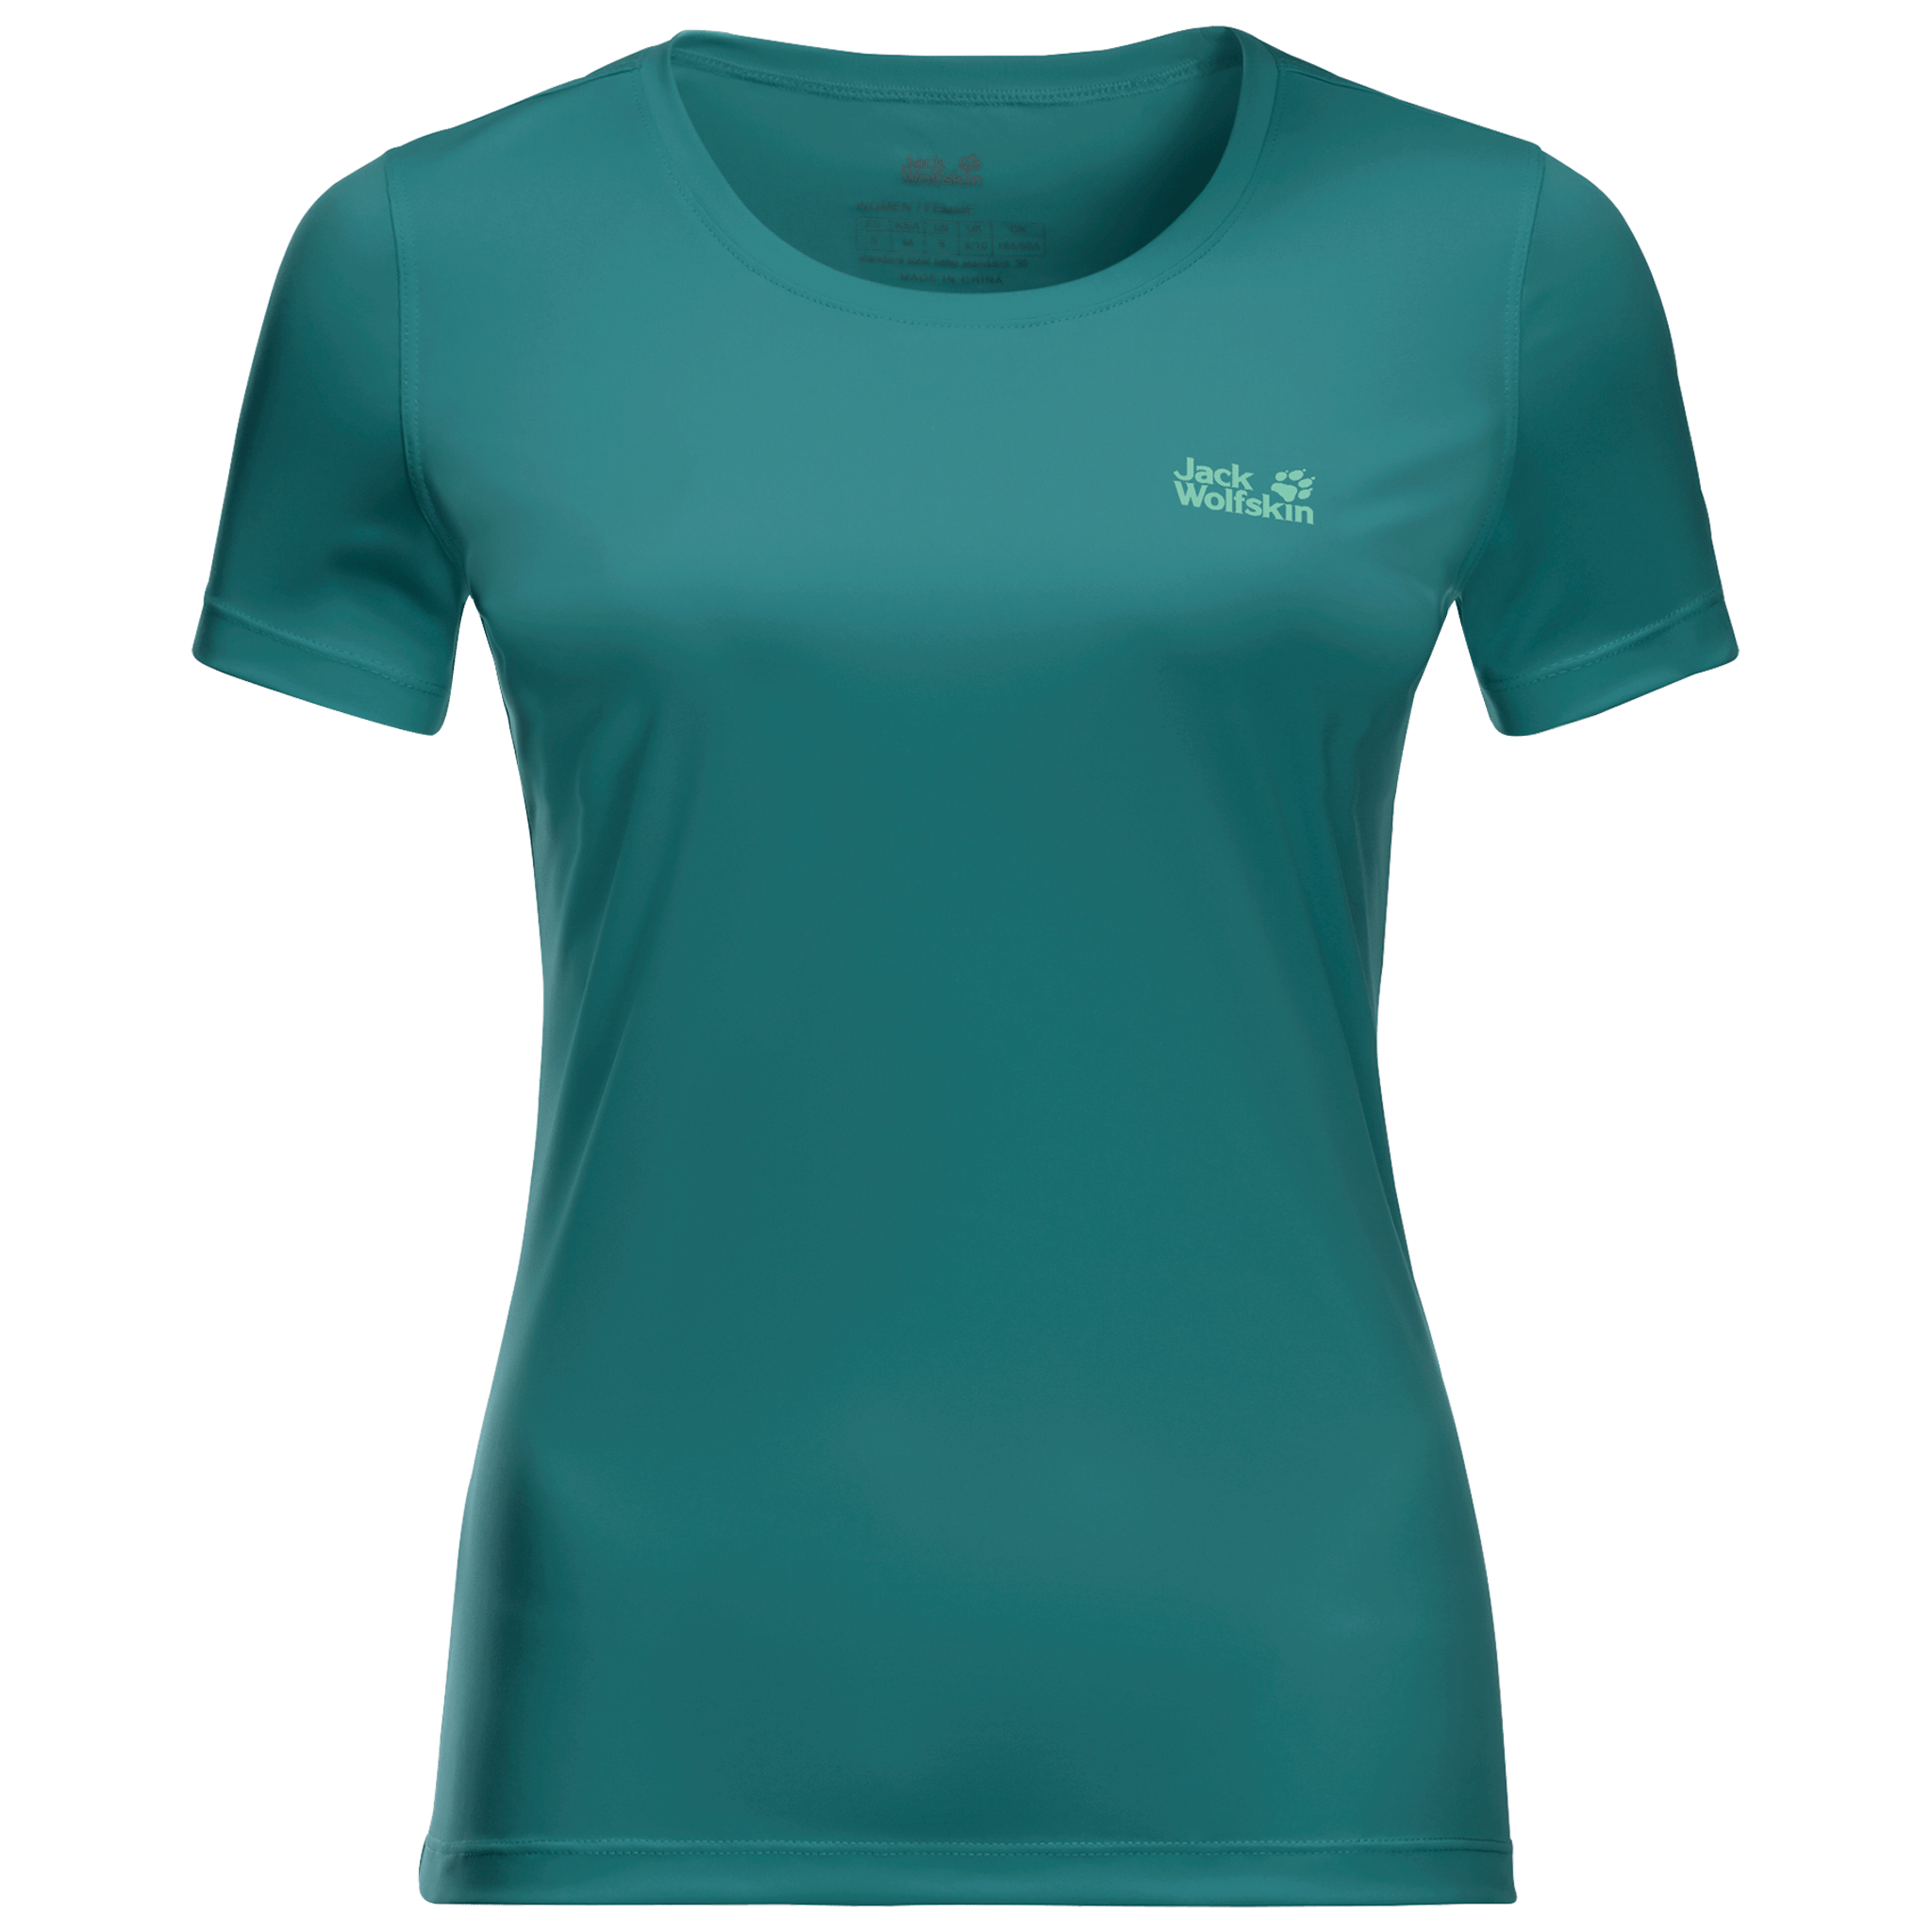 Emerald Green Womens Athletic Shirt